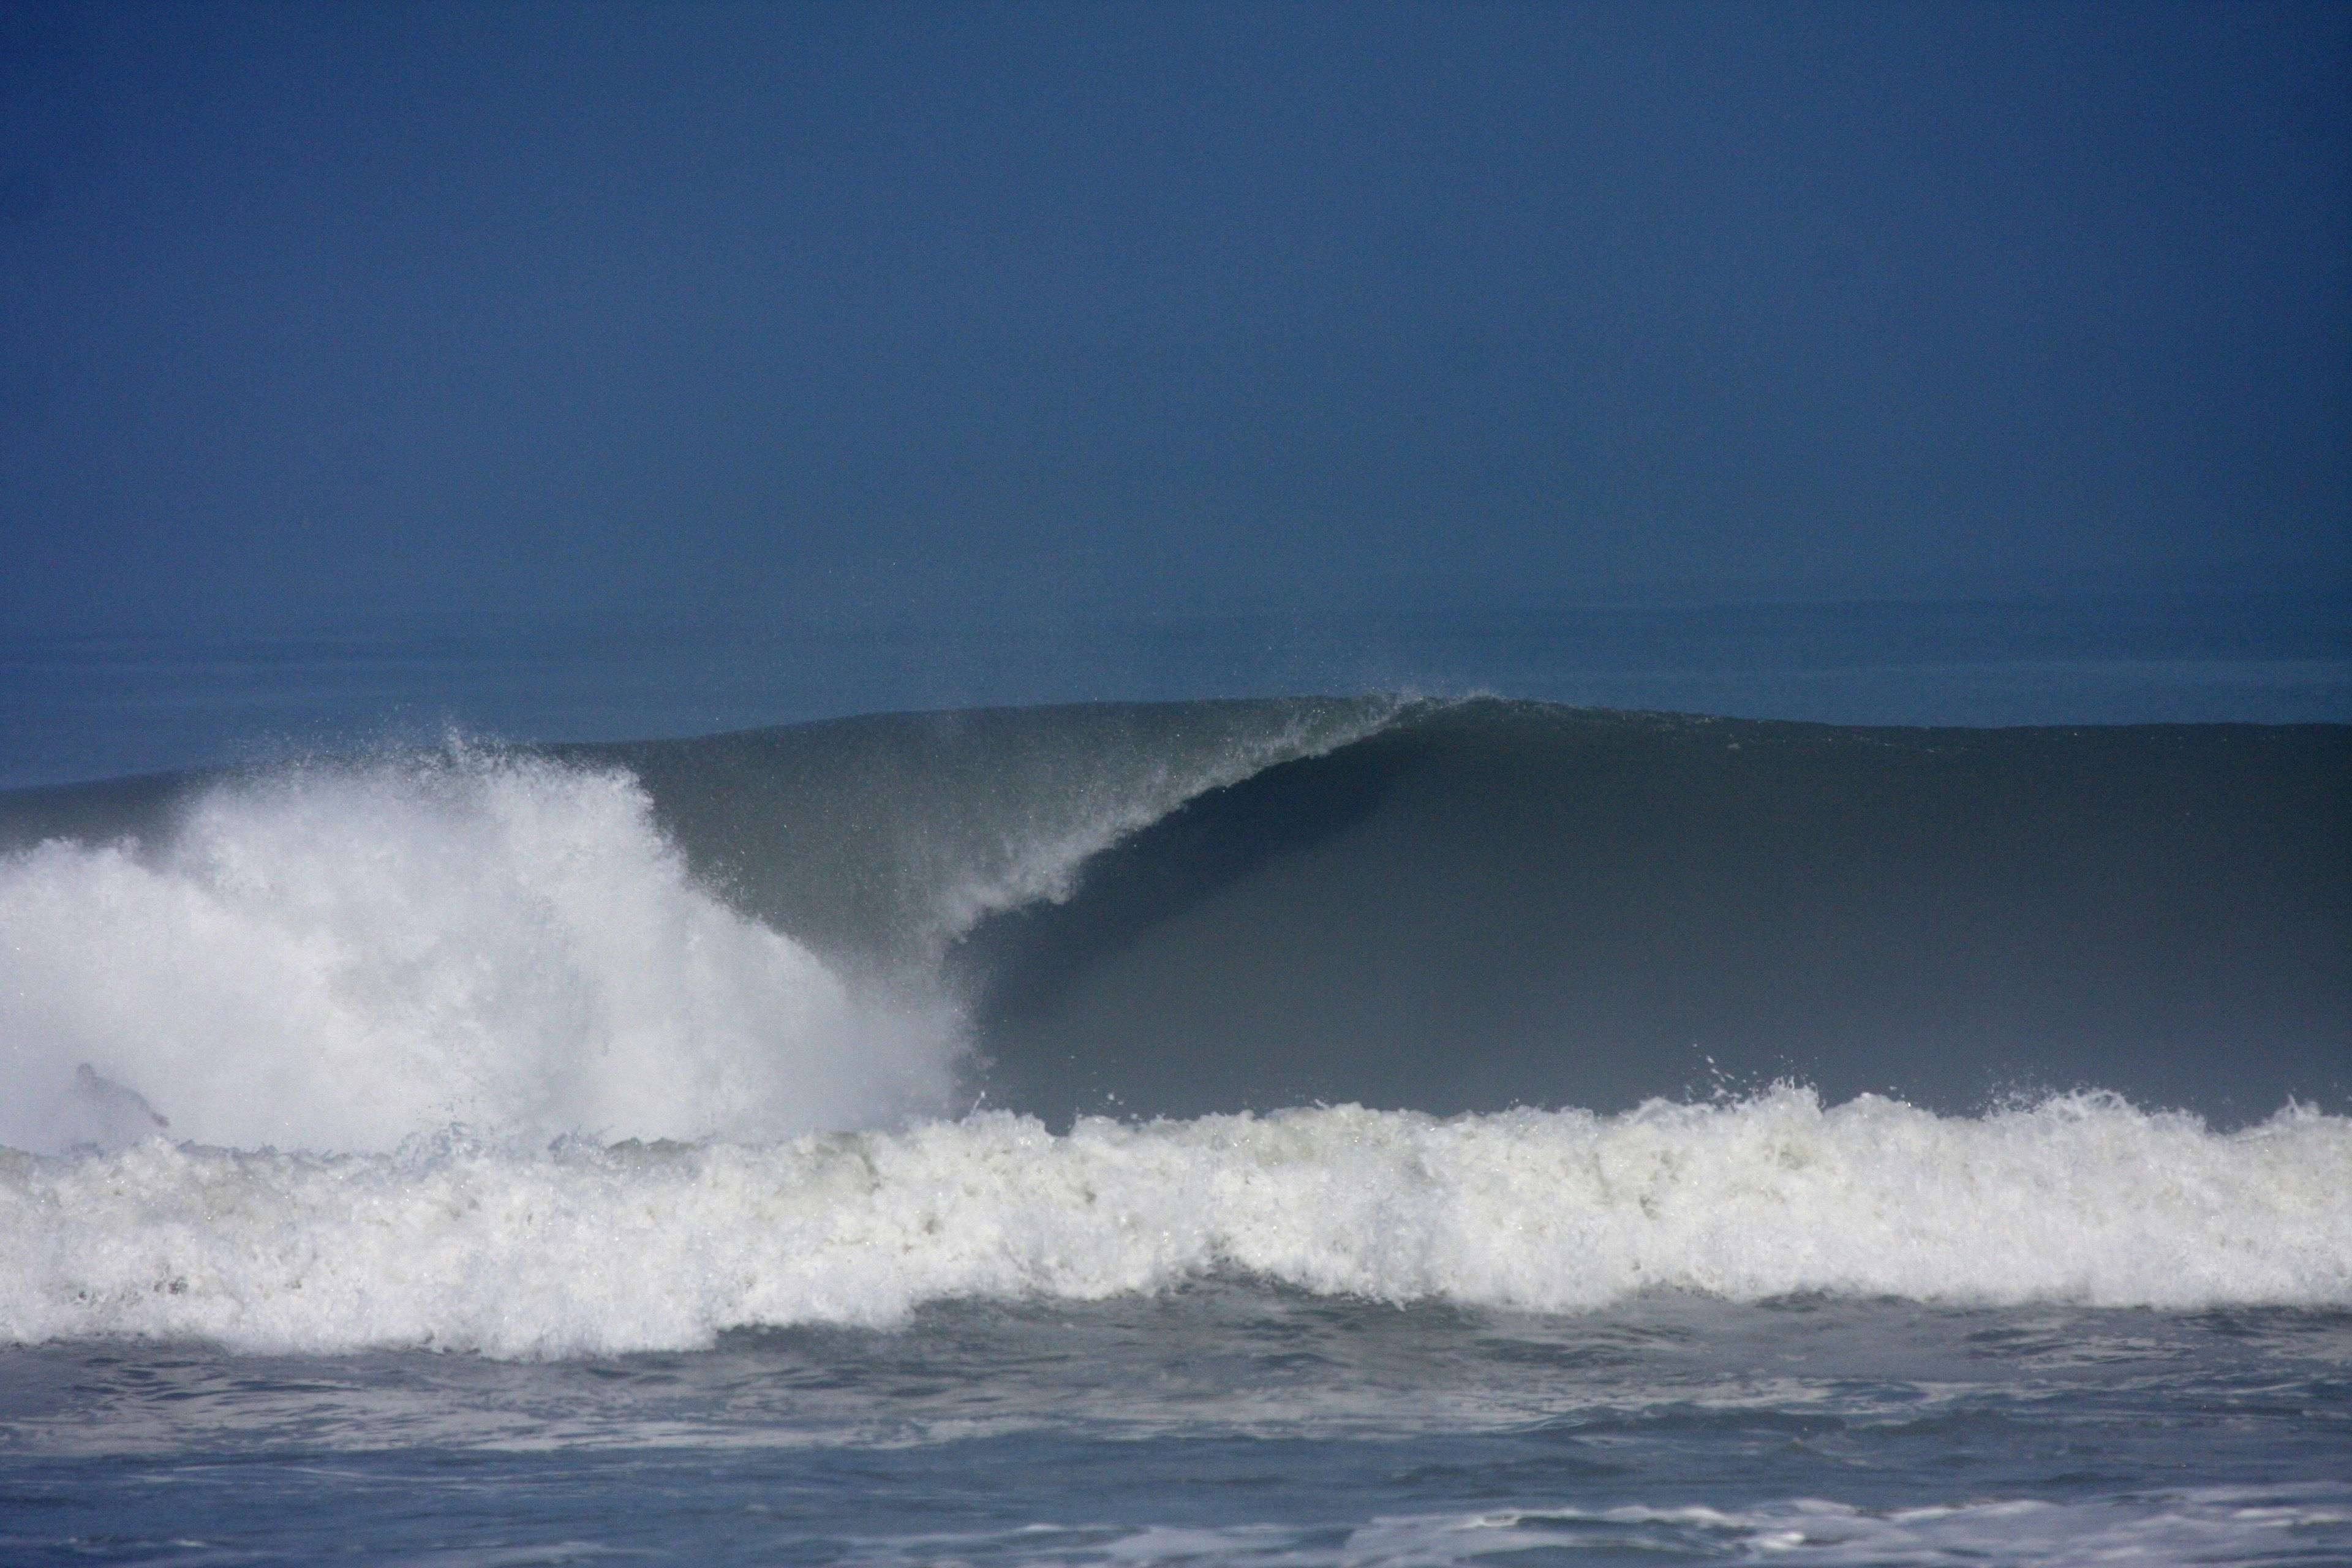 Peru Surfing Experience